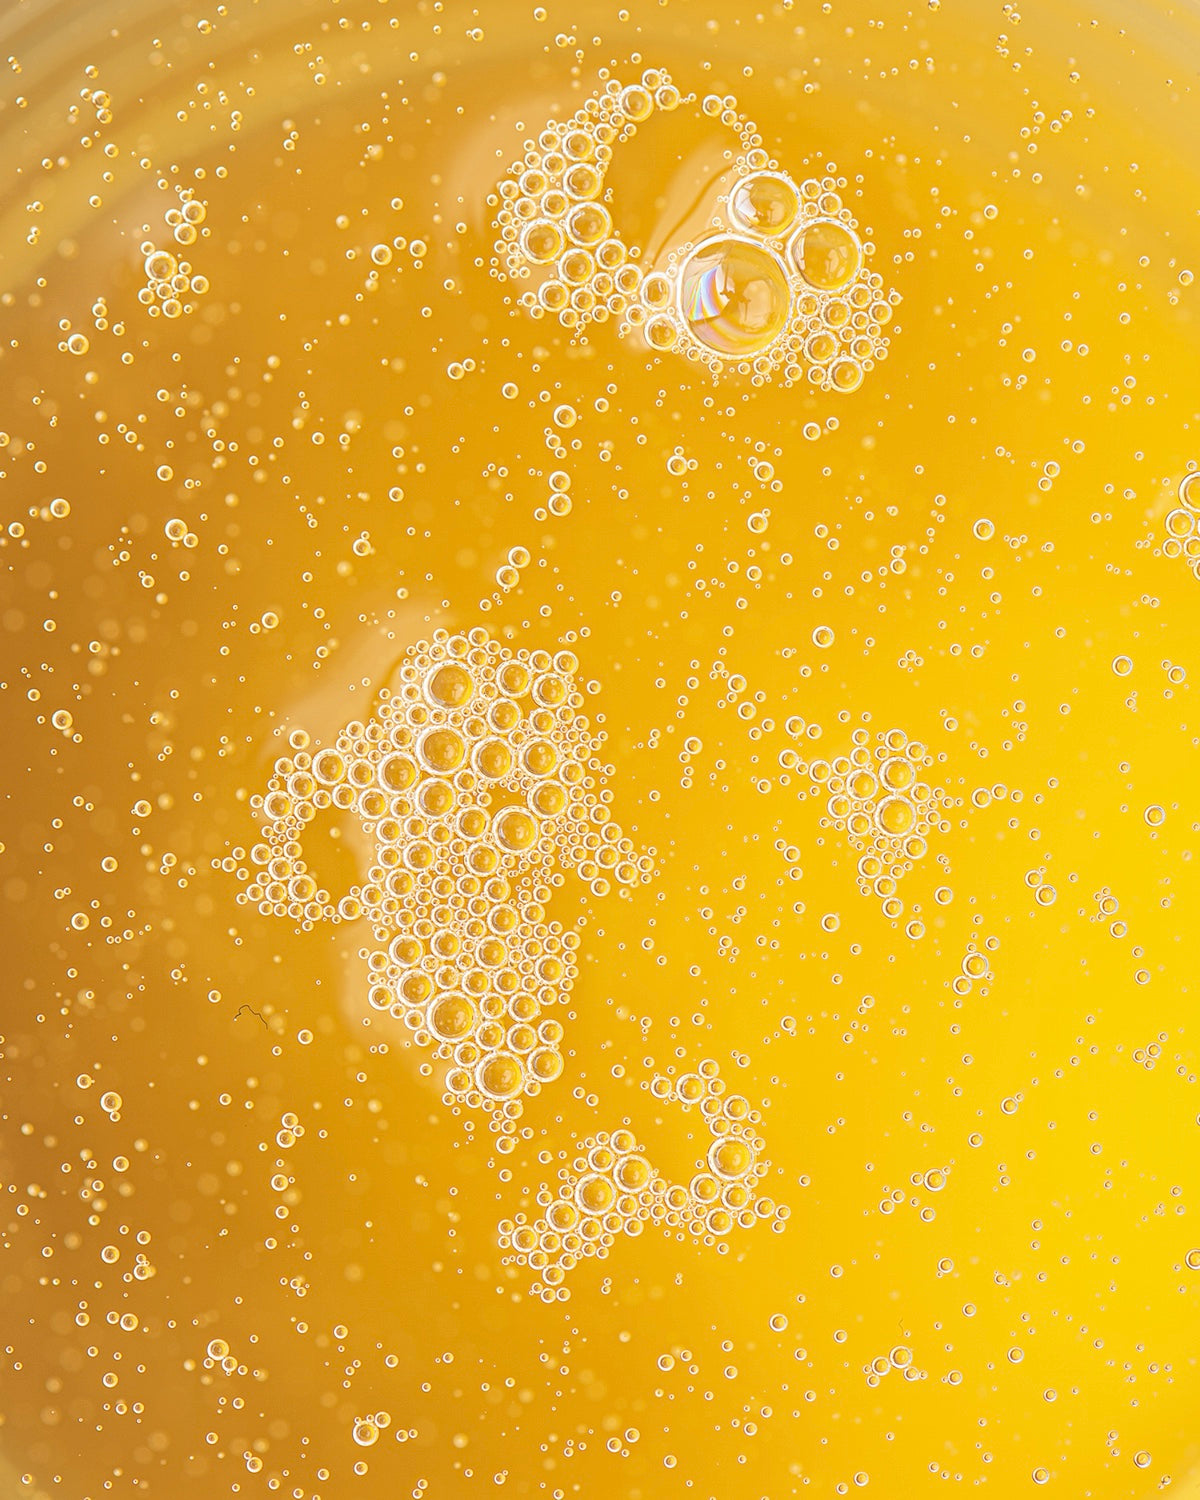 Olivella Bath & Shower Gel - Orange 16.9 Oz - Olivella